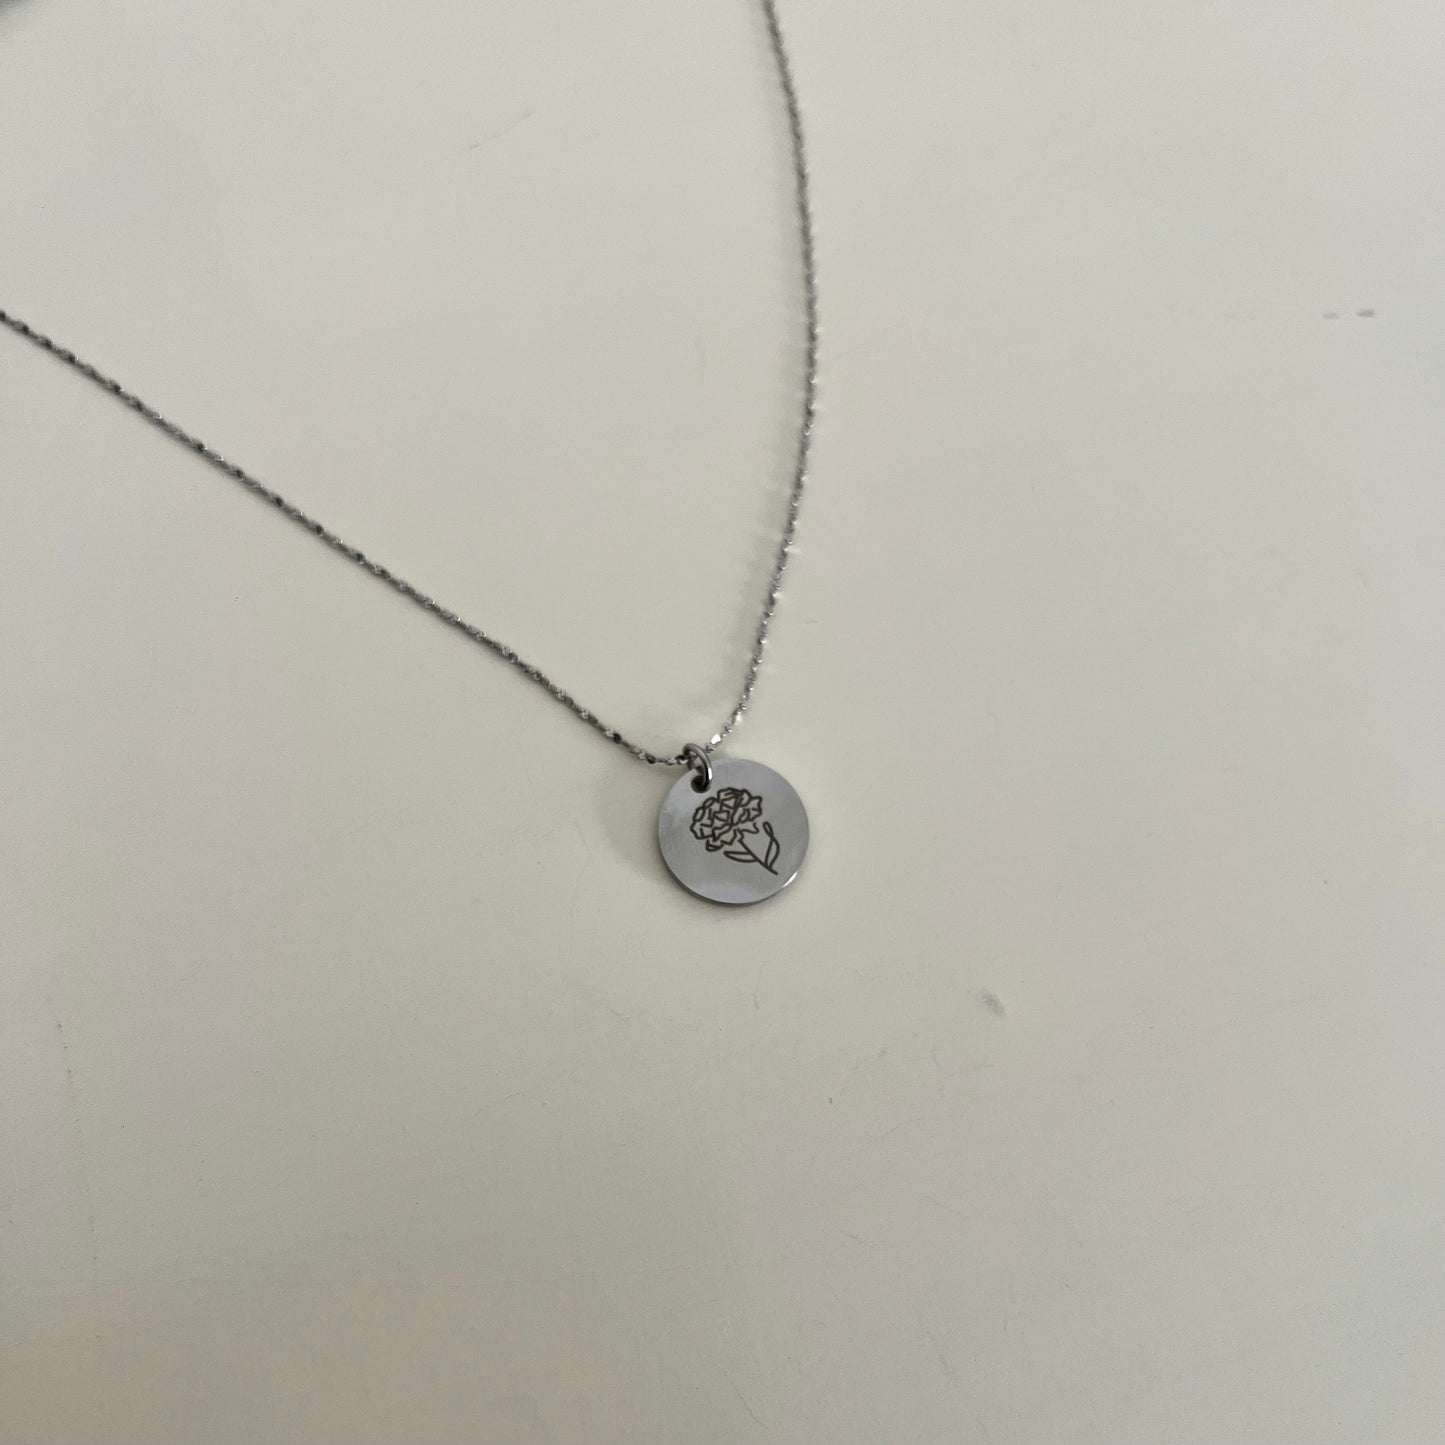 Birth flower necklace - Silver